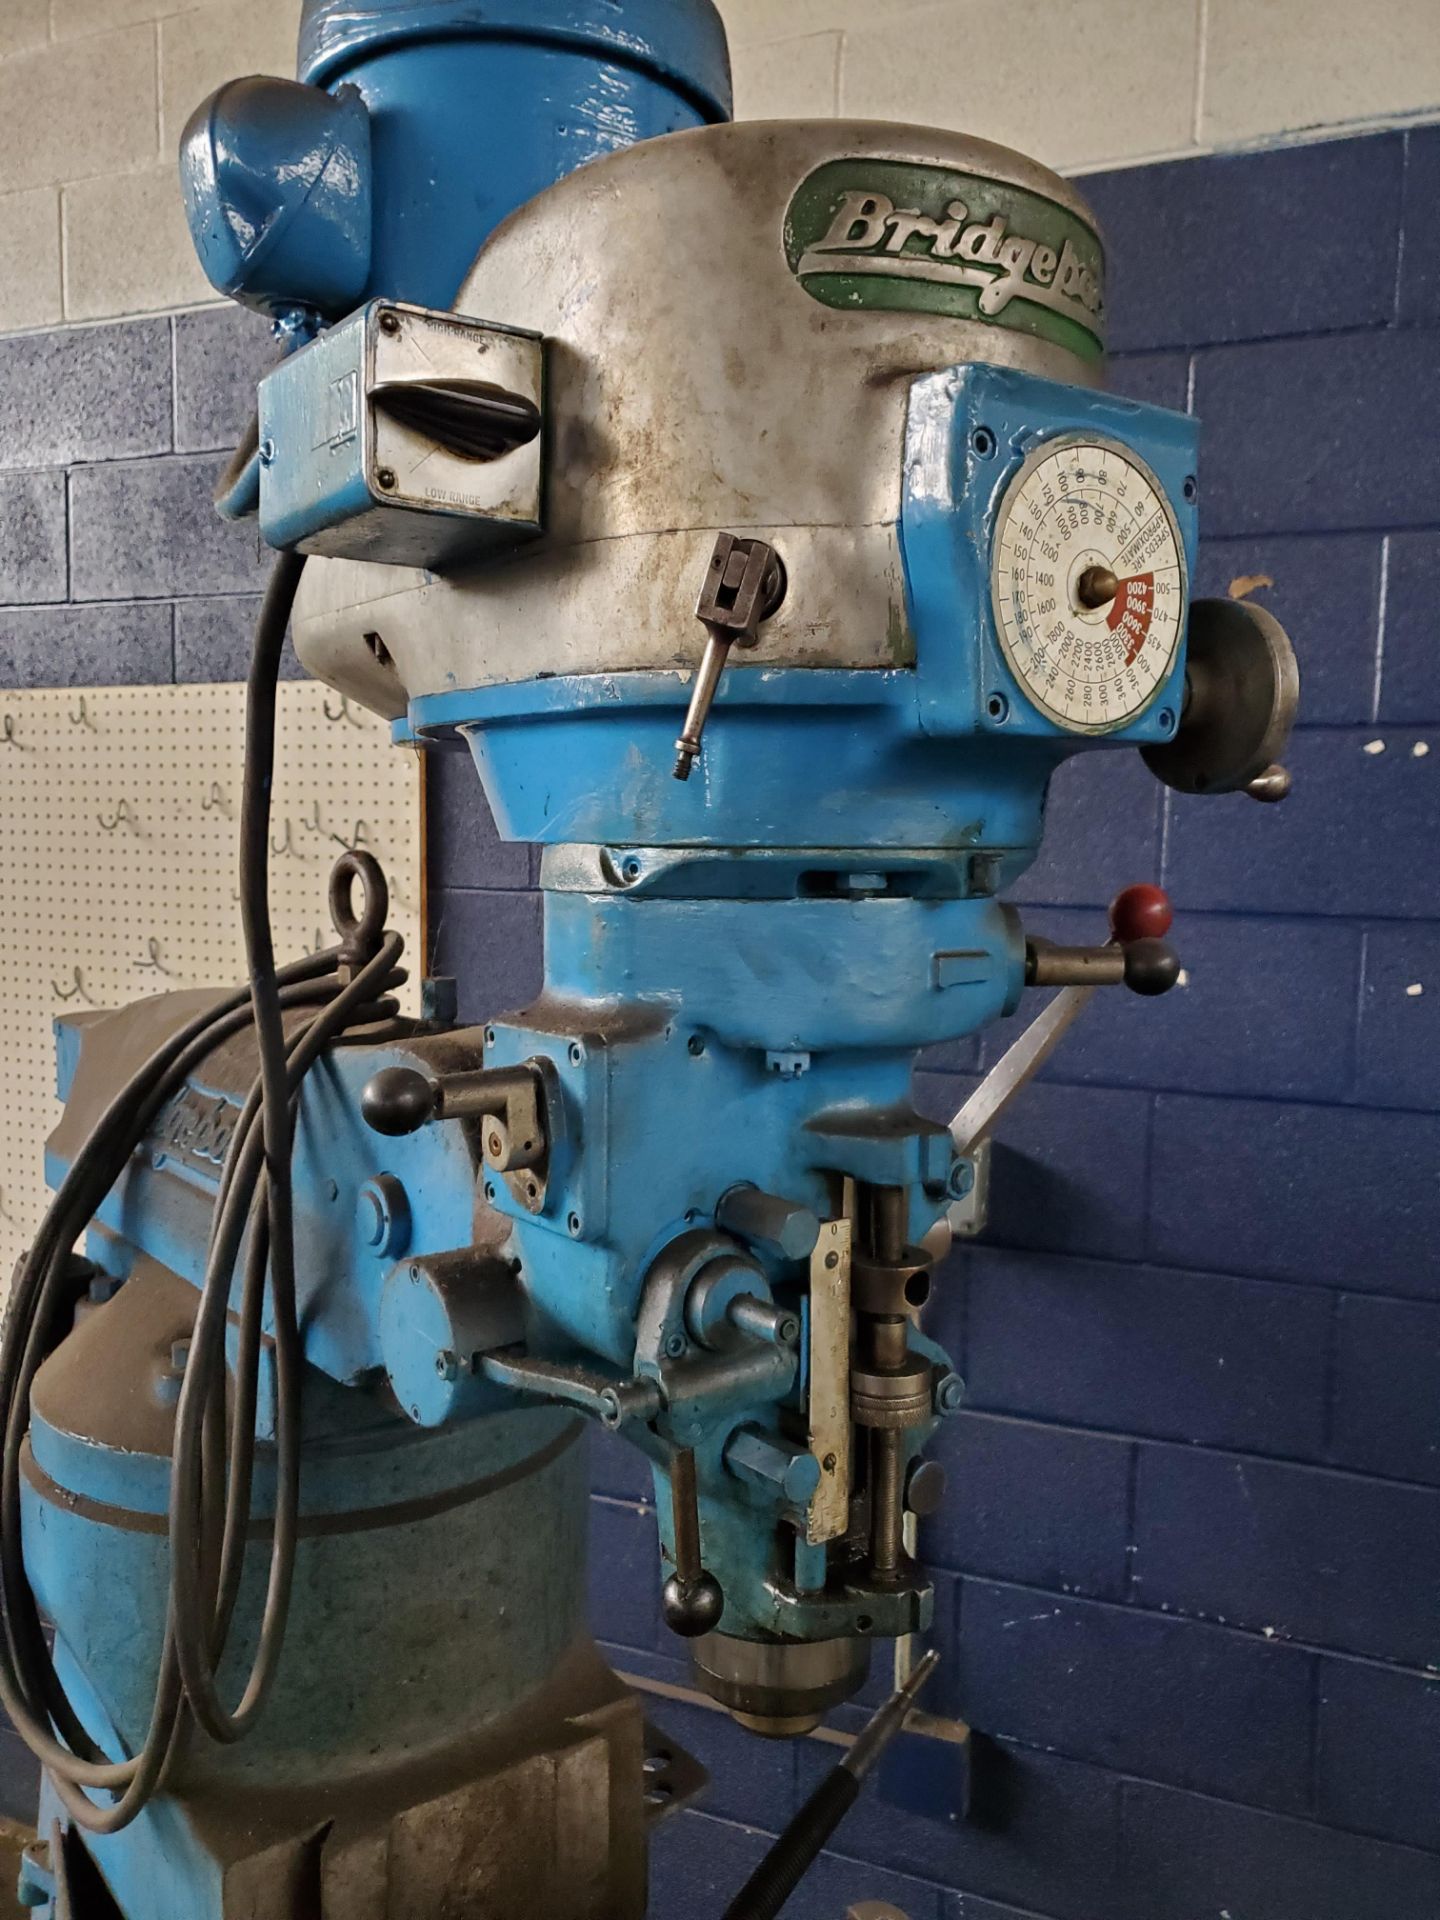 Bridgeport Parts Machine - Image 2 of 3